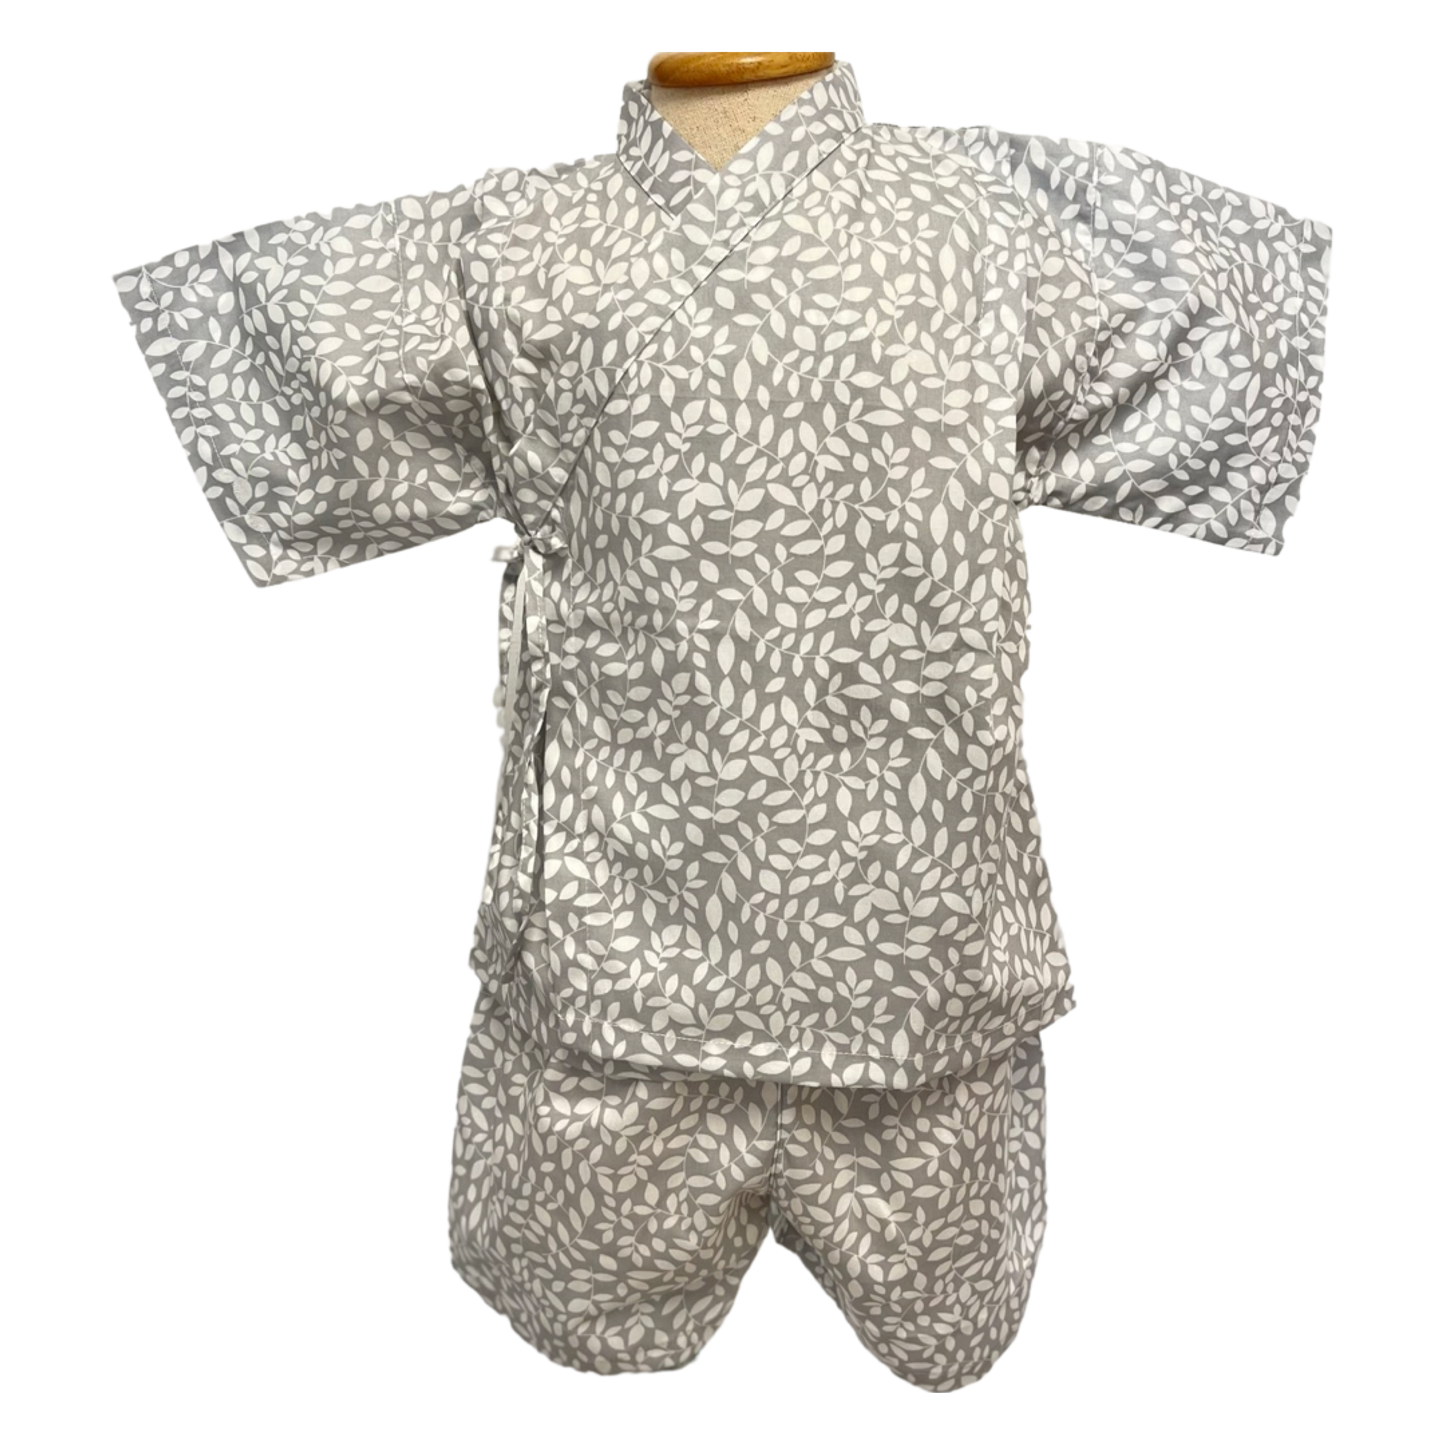 FUN Japanese Kimono Jinbei Kids Shirt + Pants Outfits Clothes 2Pcs/Set - Serene Leaves